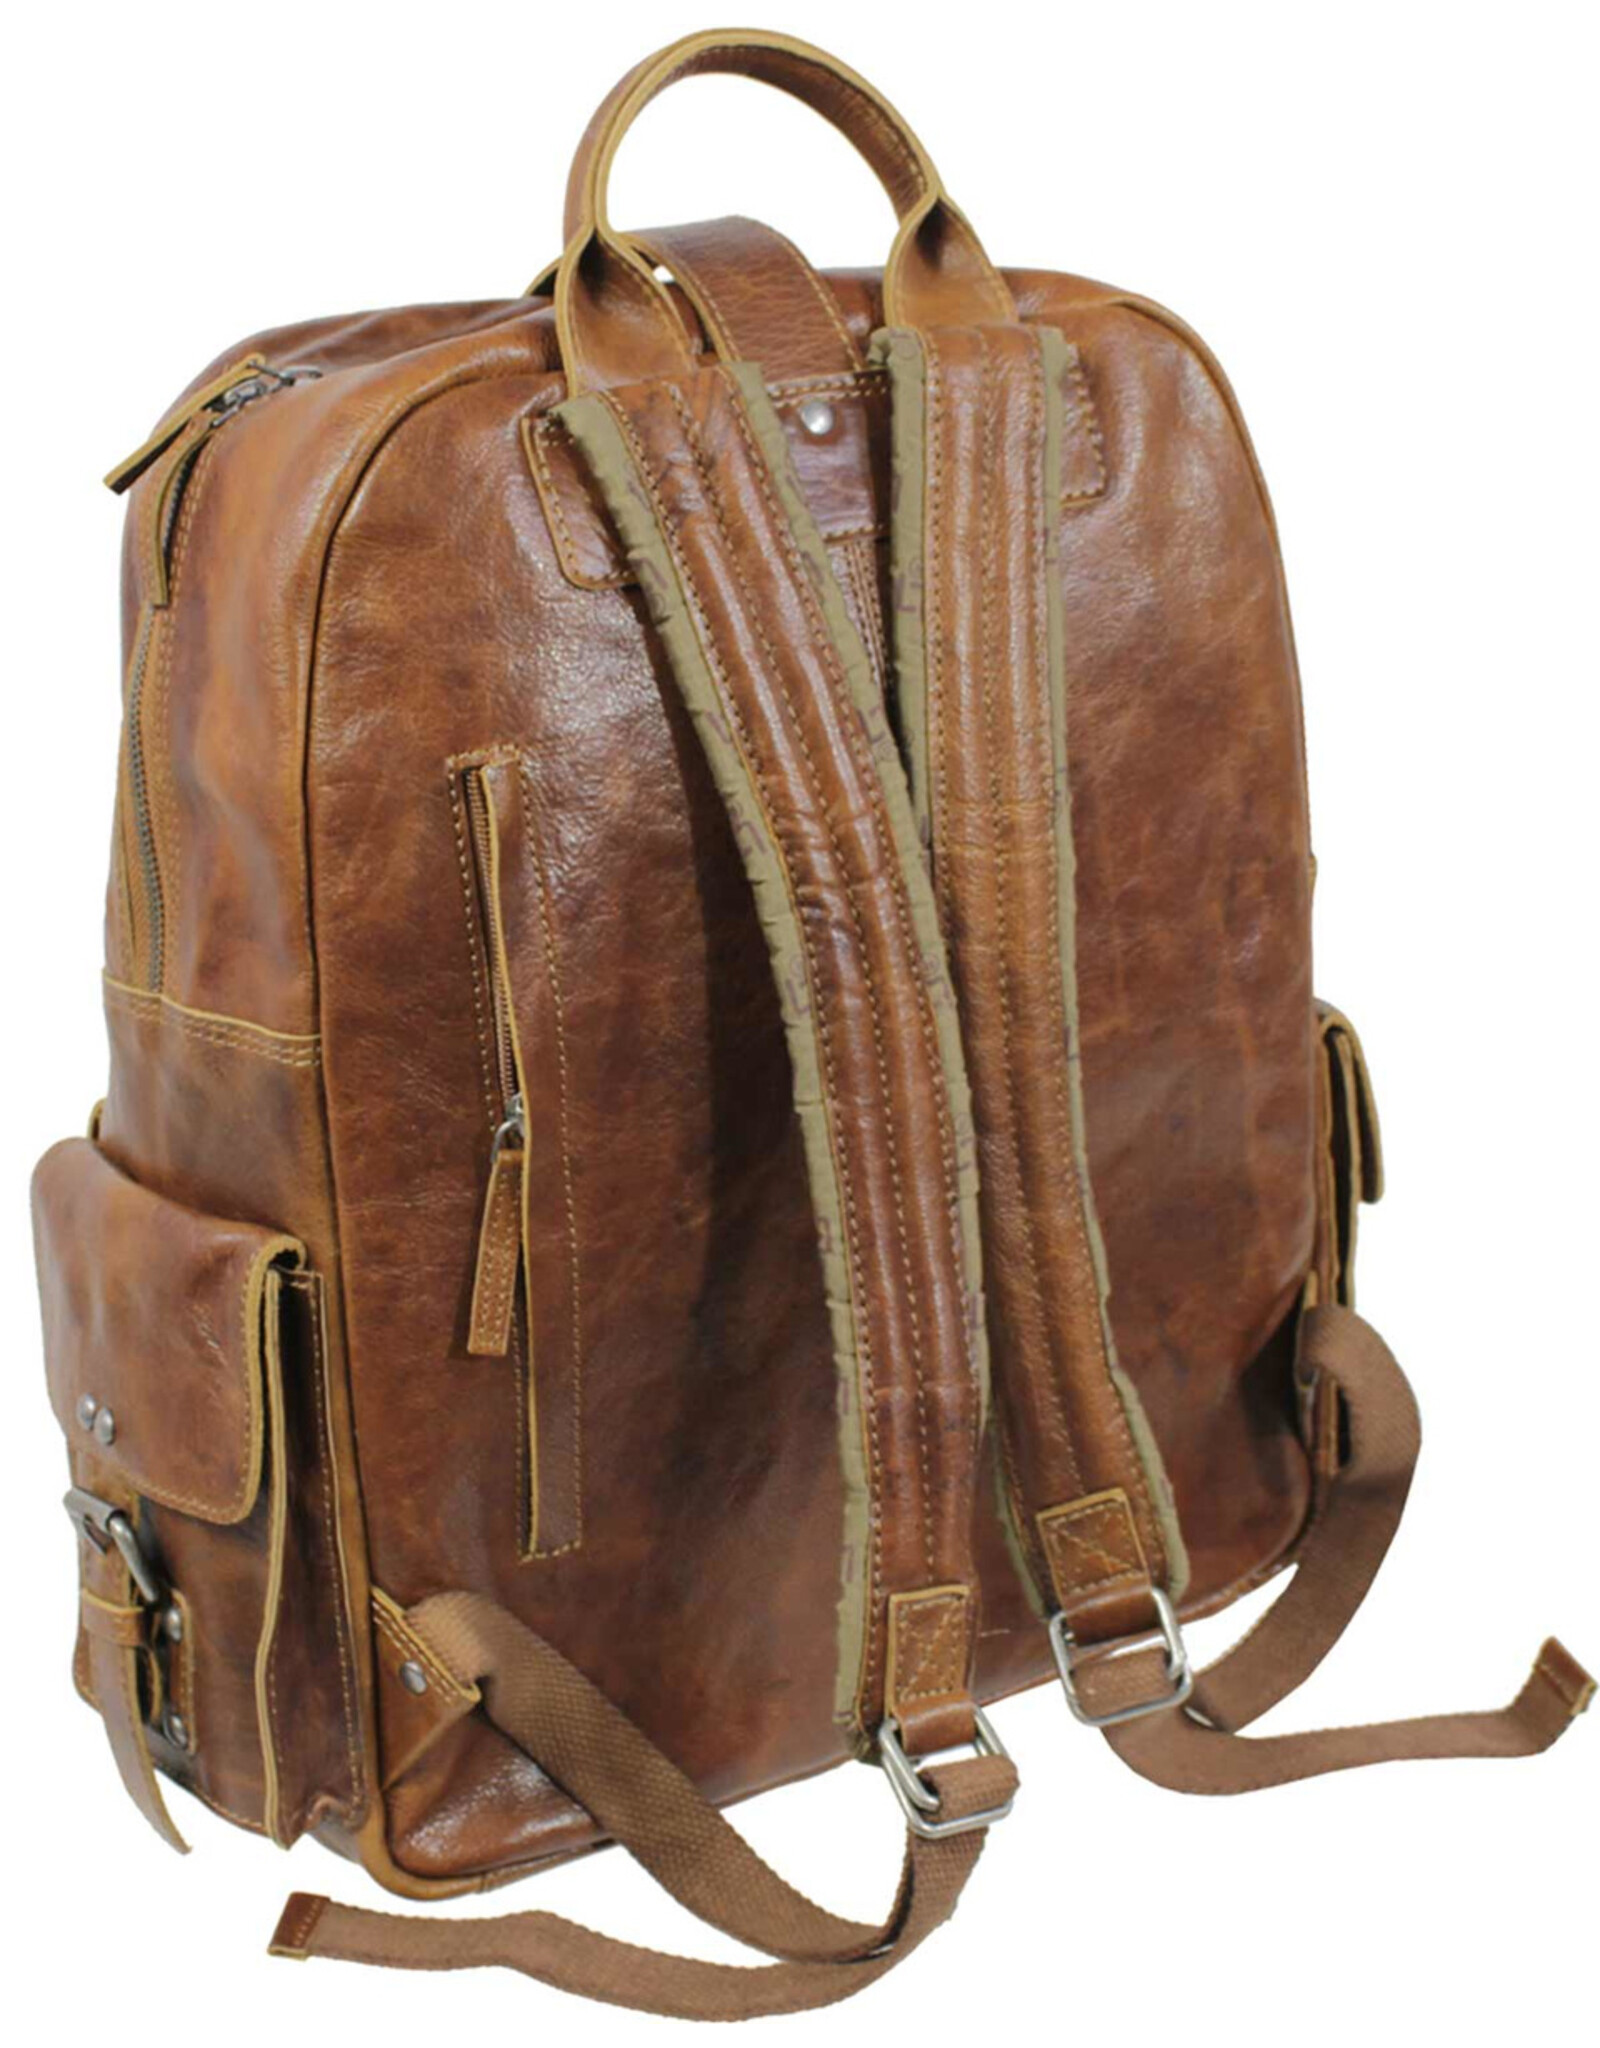 LandLeder Leather backpacks Leather shoppers - Leather Backpack JEROME XL Washed Leather